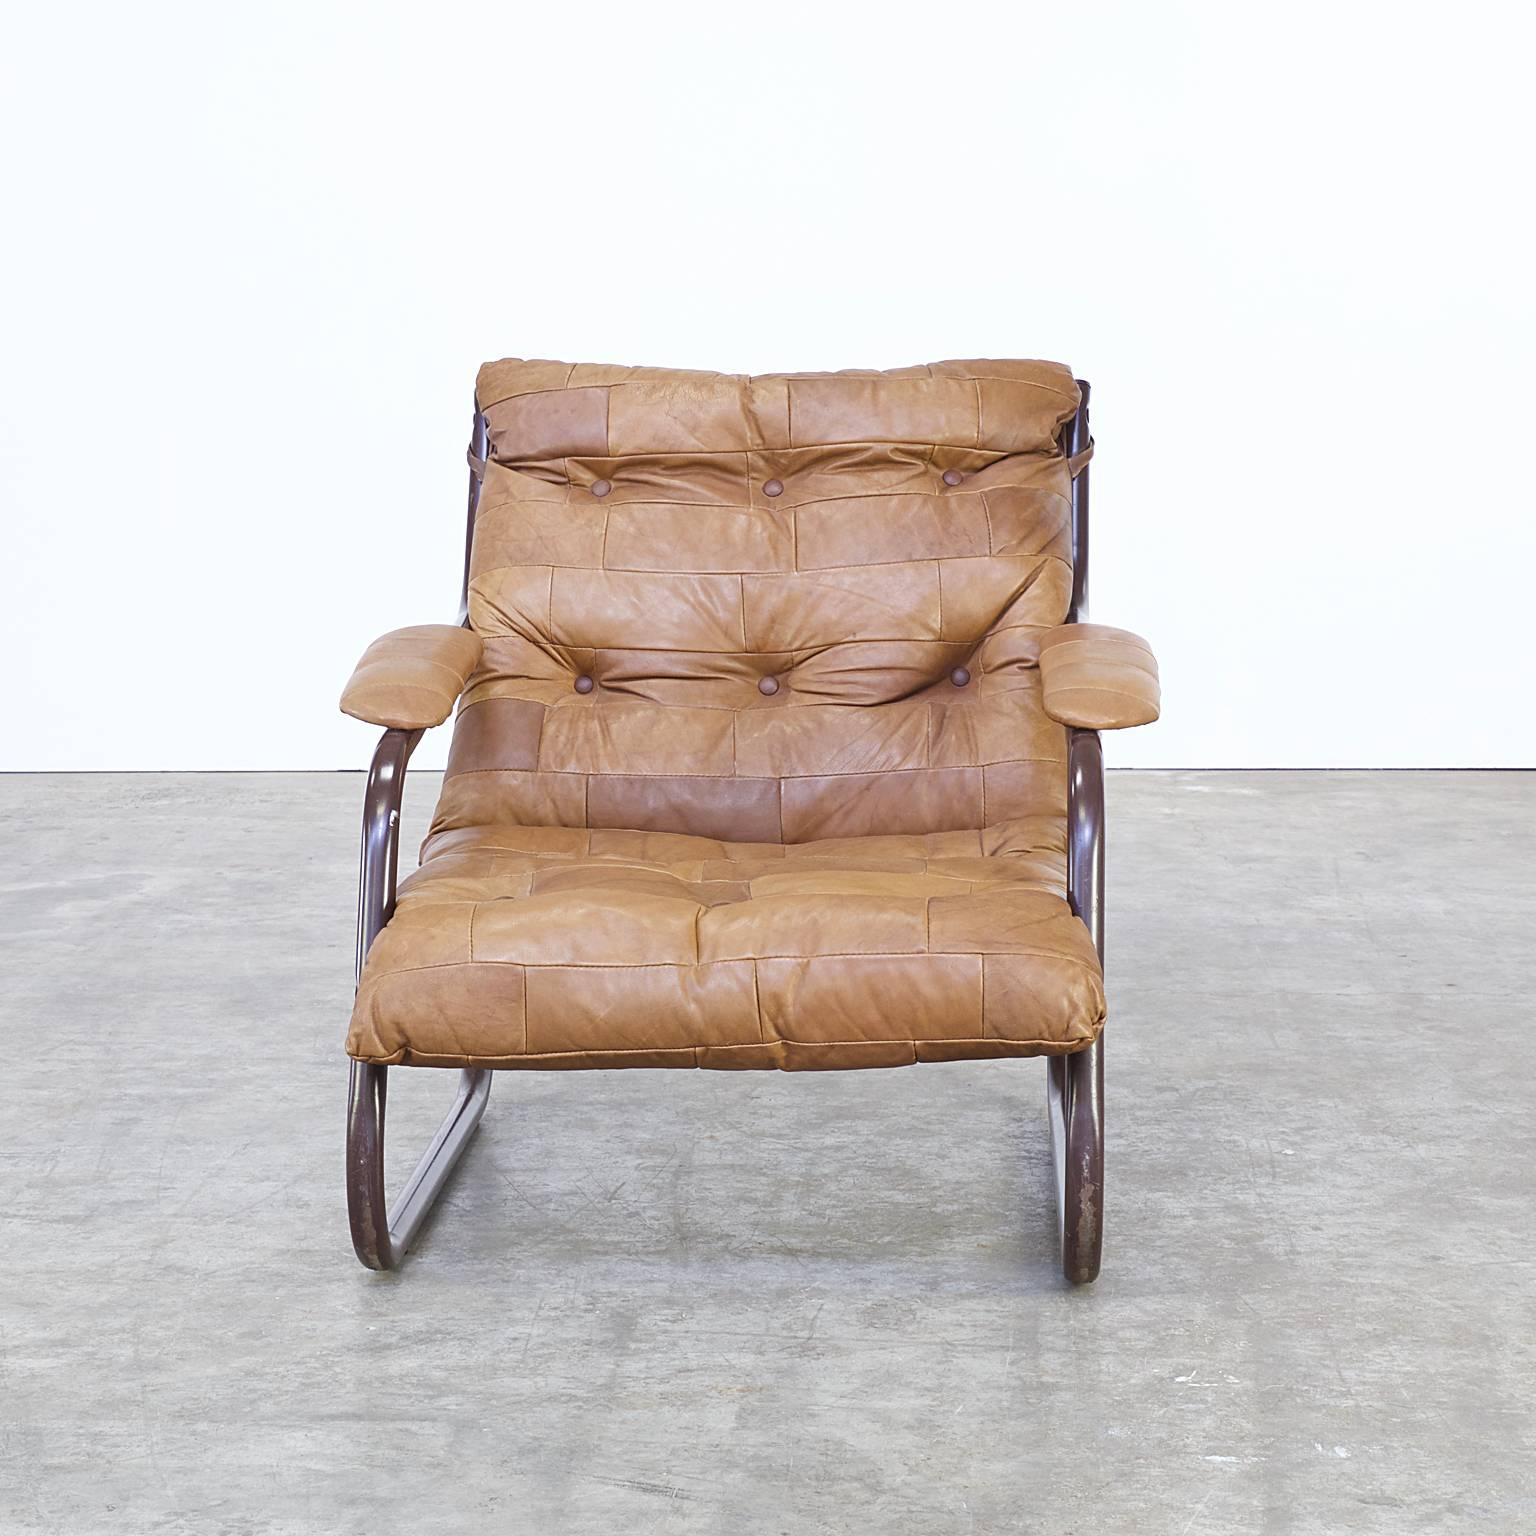 1970s vintage cognac leather patchwork fauteuil. Leather patchwork, cognac. Good condition, wear consistent with age and use. Dimensions: 75cm W x 80cm D x 76cm H x 34cm seat.